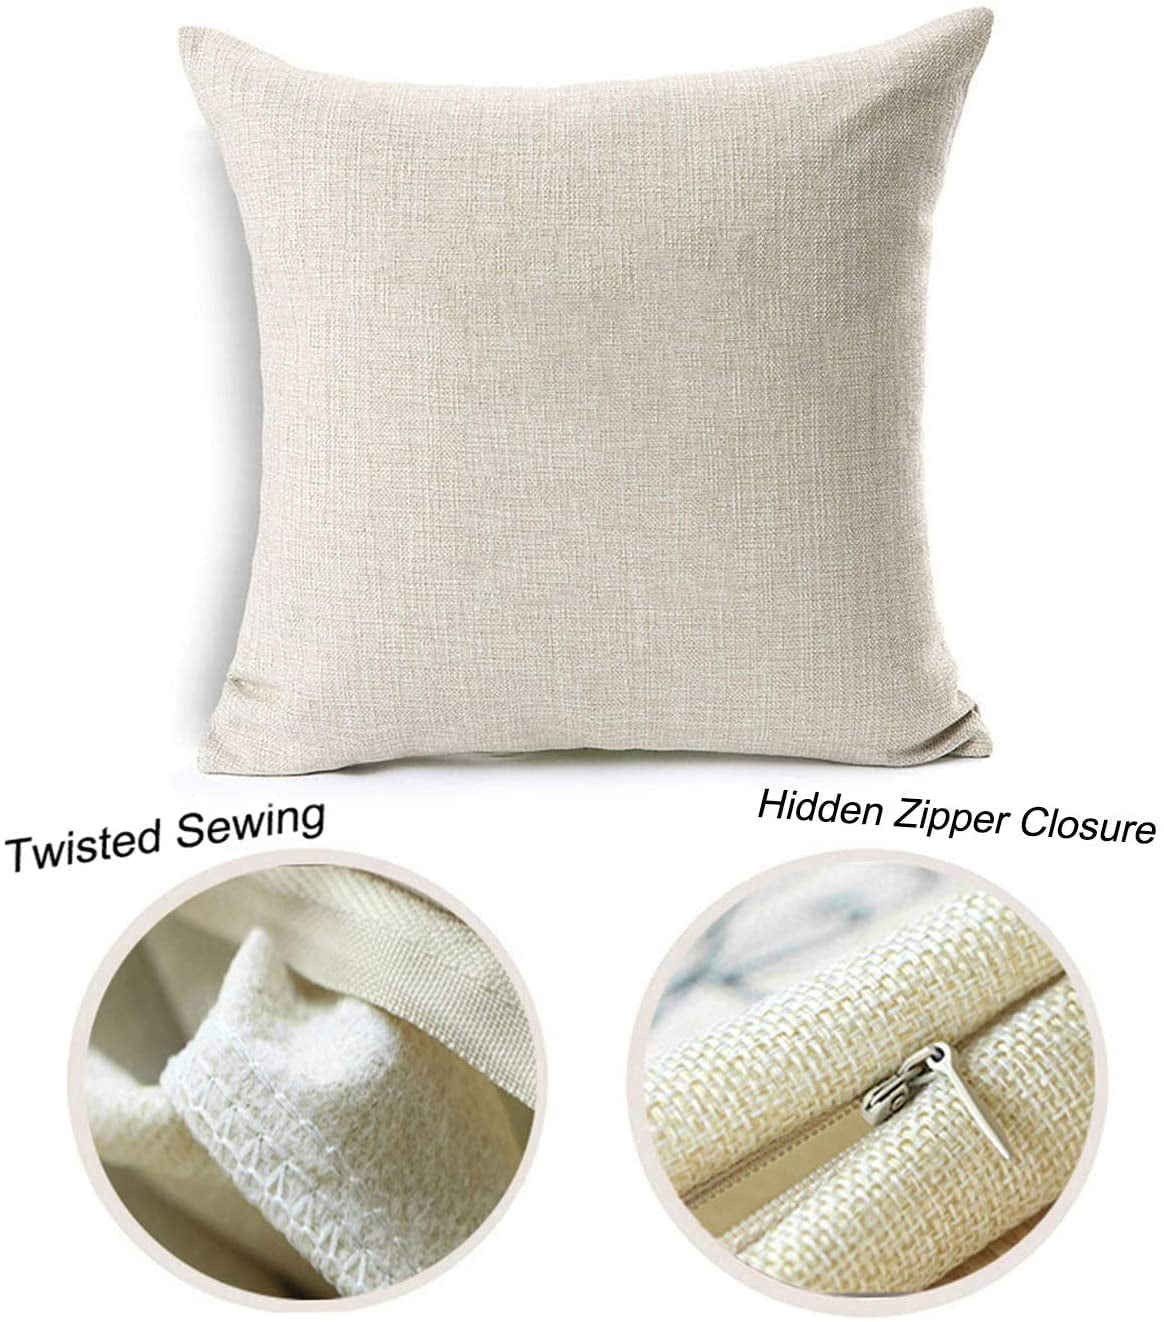 Details about   Pillow Case Home Decorative Eiffel Tower Throw Bedding Sofa Decor Cotton Covers 